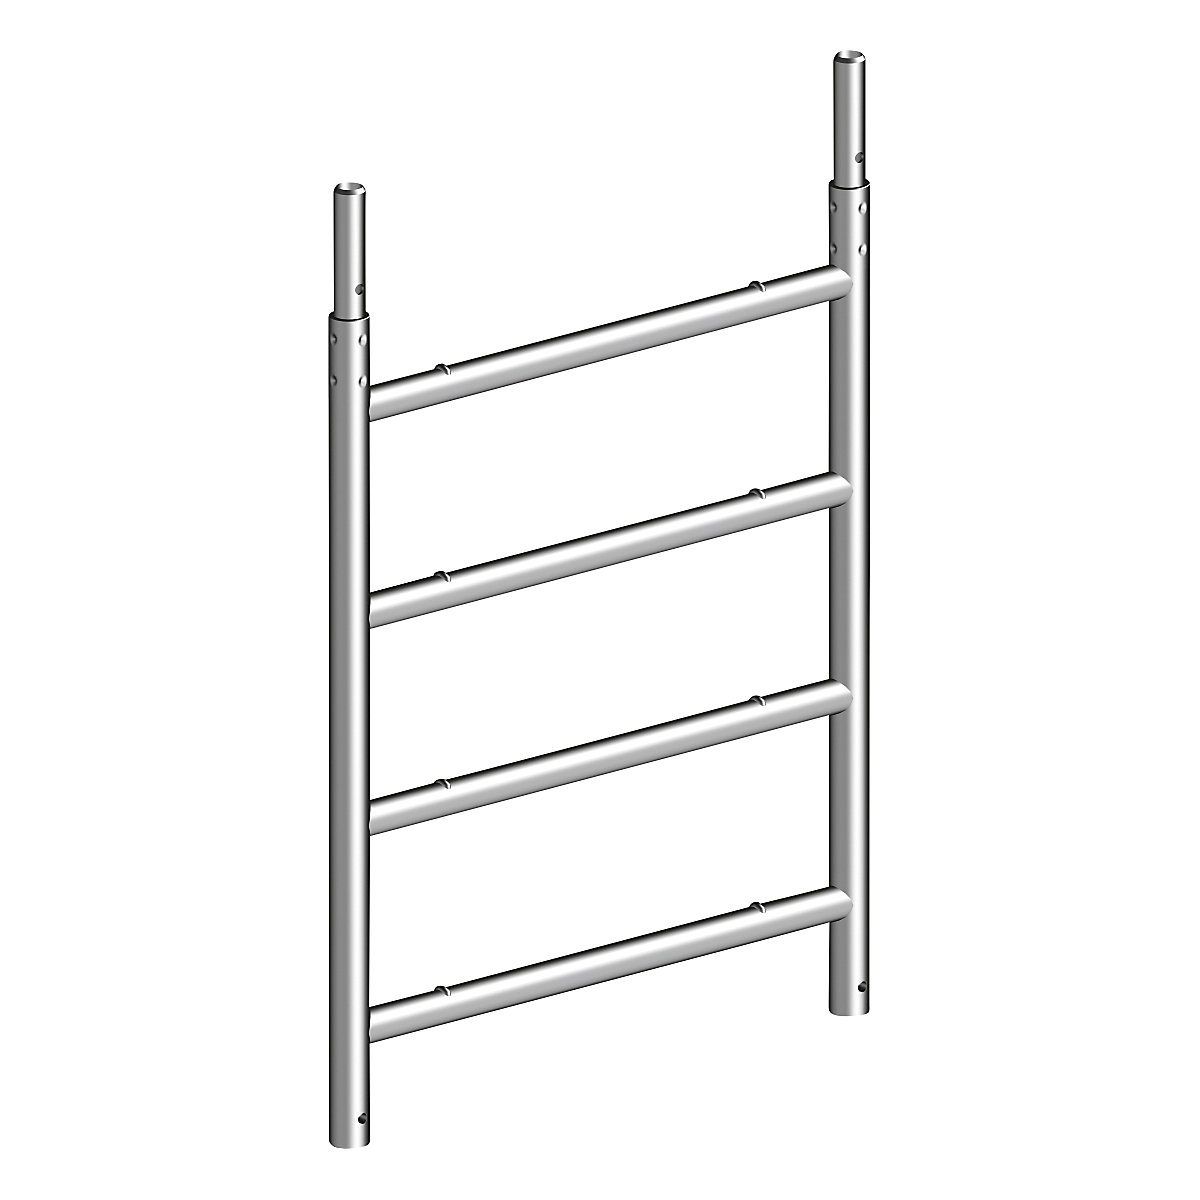 Ladder frame - Layher